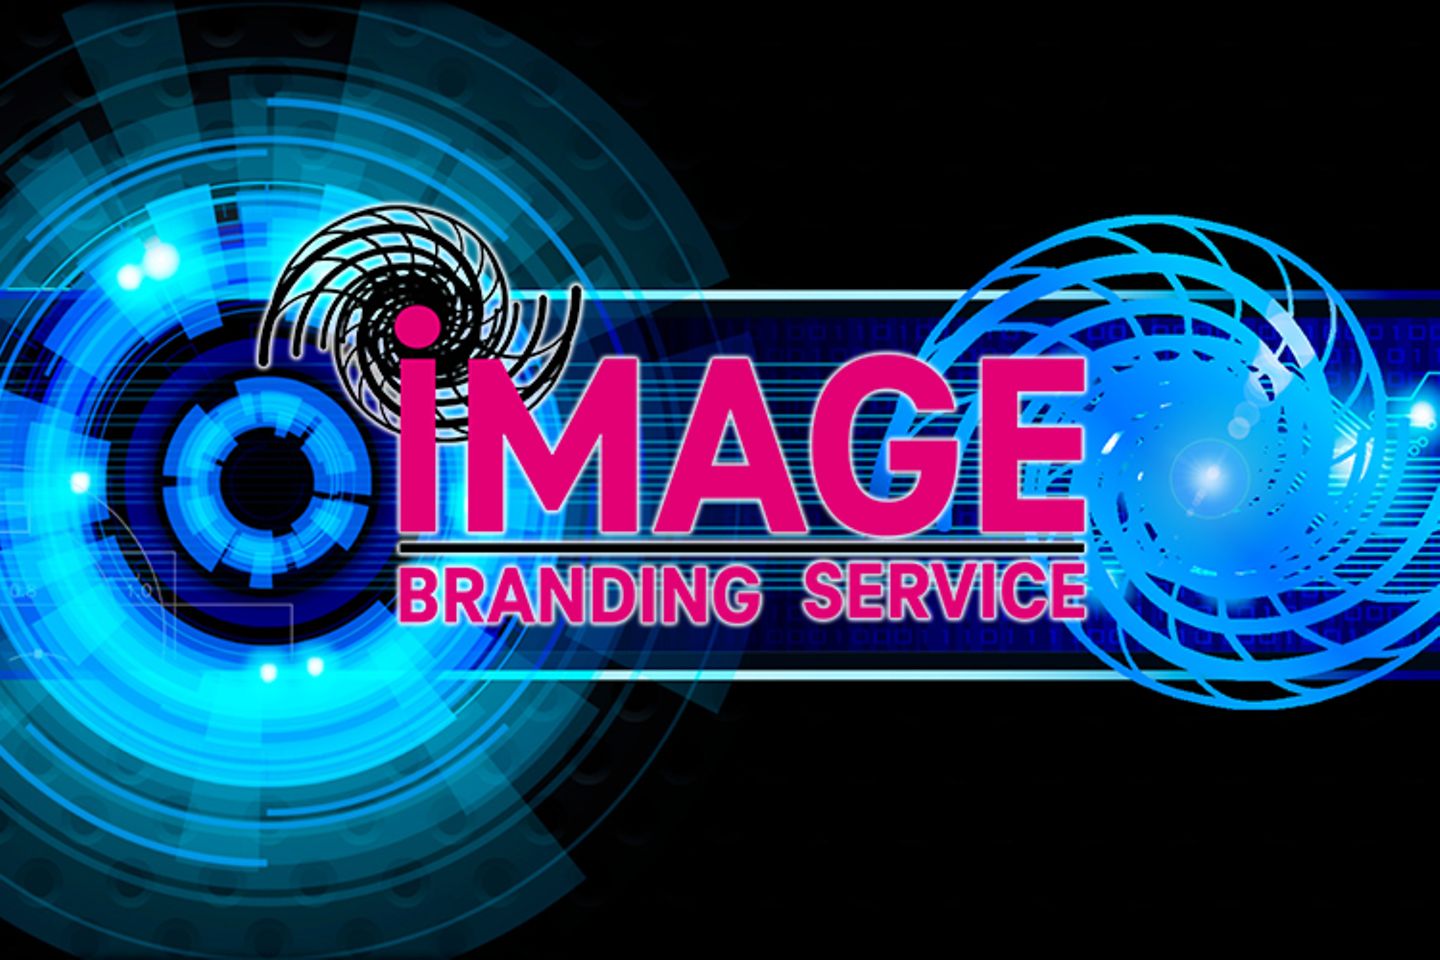 Logotipo del Image Branding Service de T-Systems